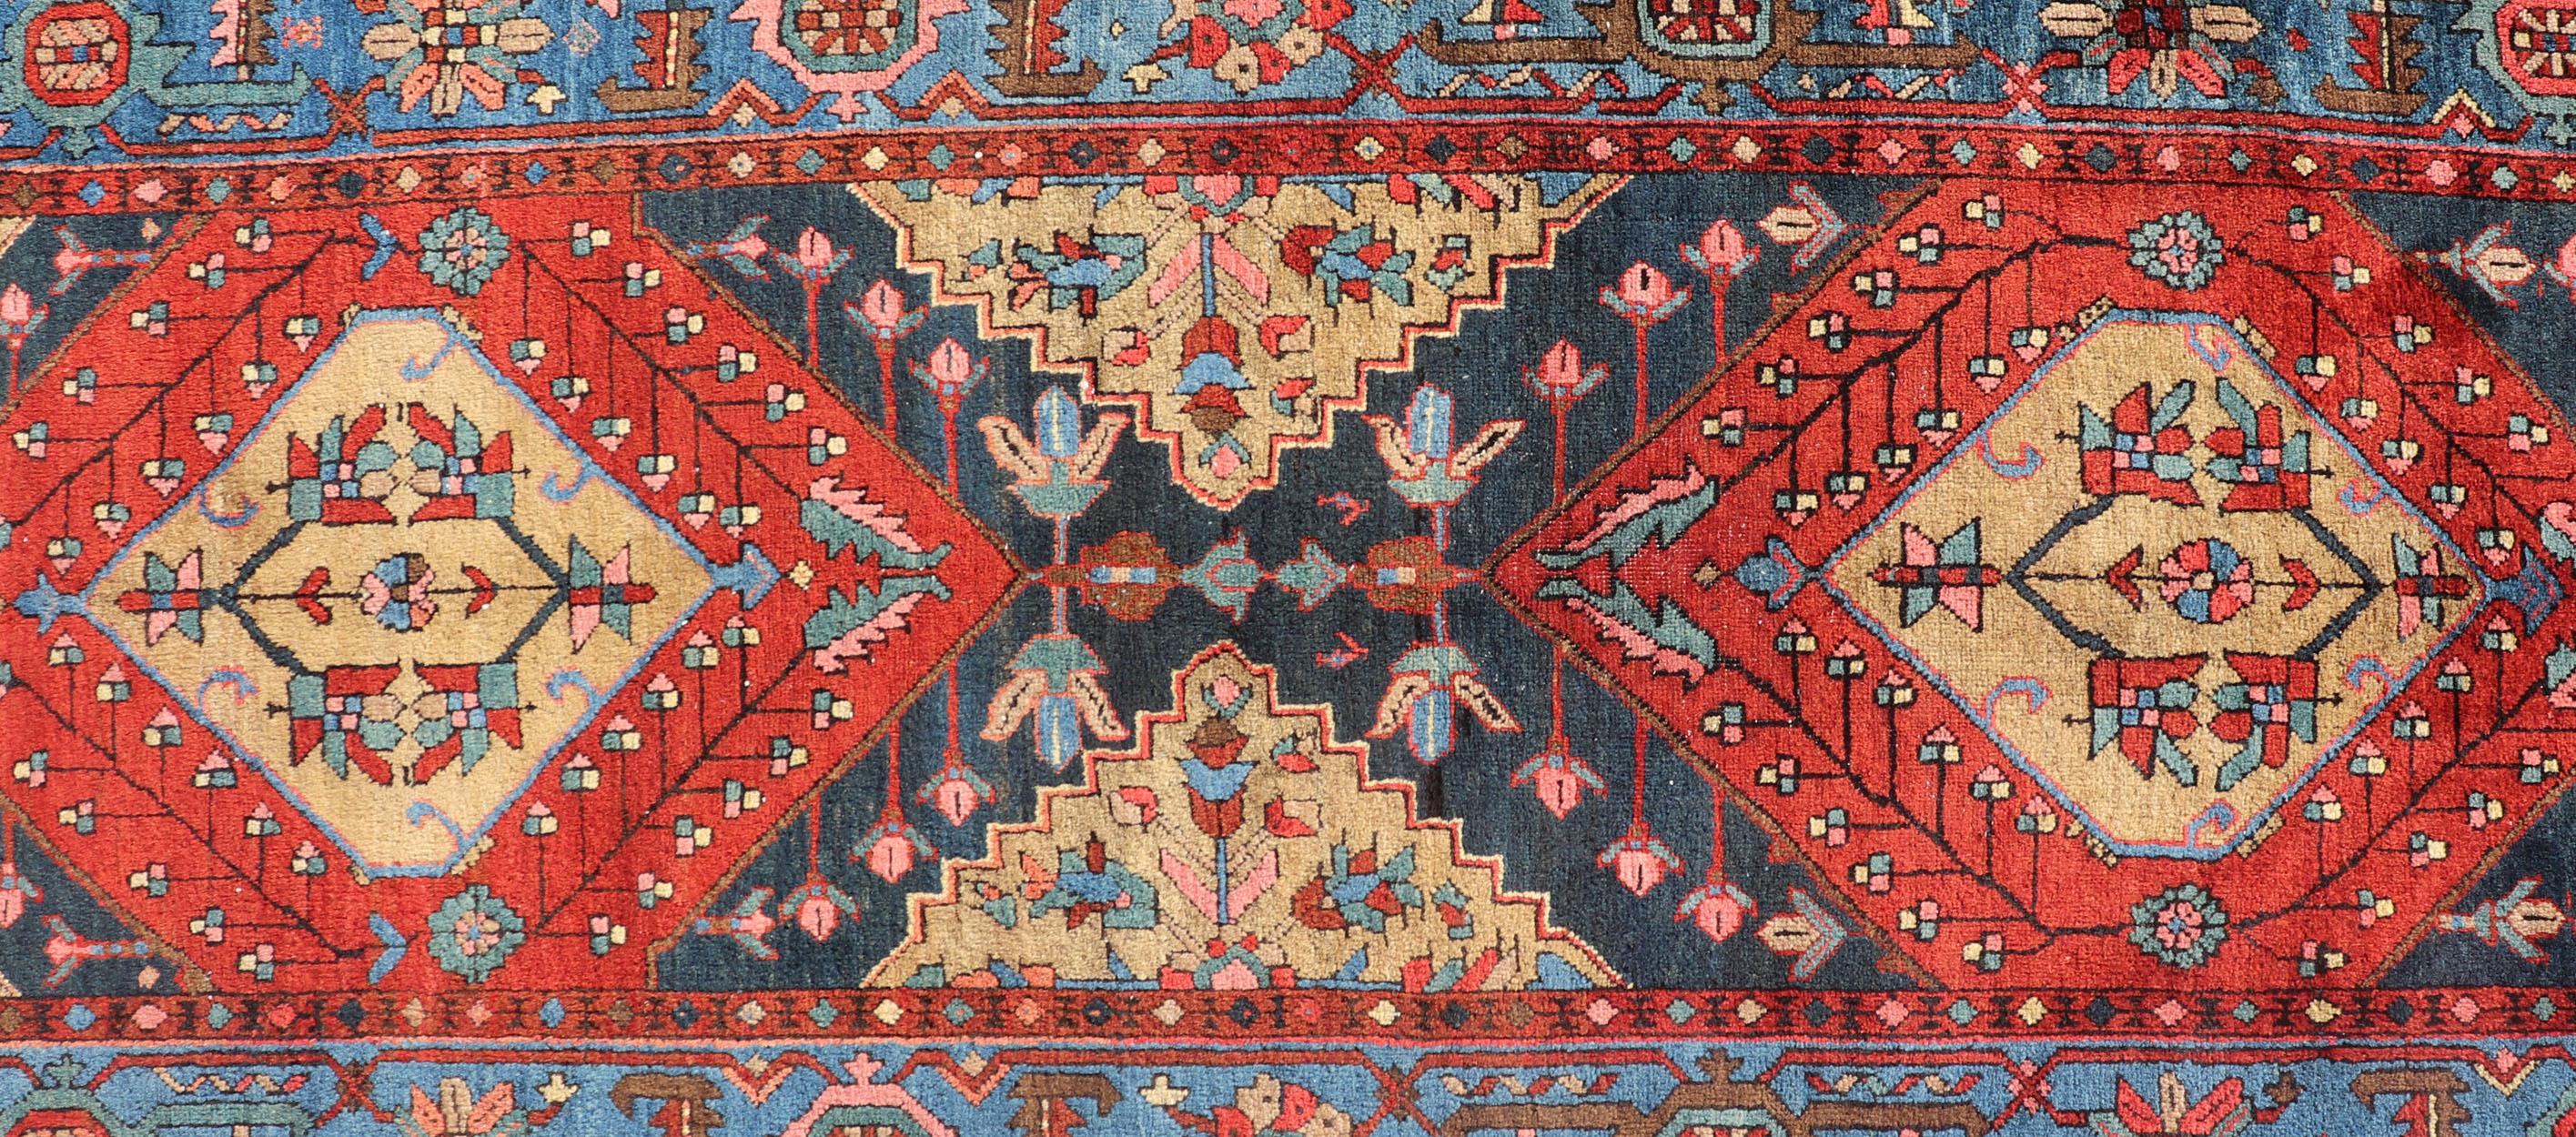 Very long antique Persian Heriz runner with geometric medallion design in red, blue and colorful tones, Keivan Woven Arts Atlanta / rug EMB-9571-P13889, country of origin / type: Iran / Heriz, circa 1920

Measures: 3 x 14'9.